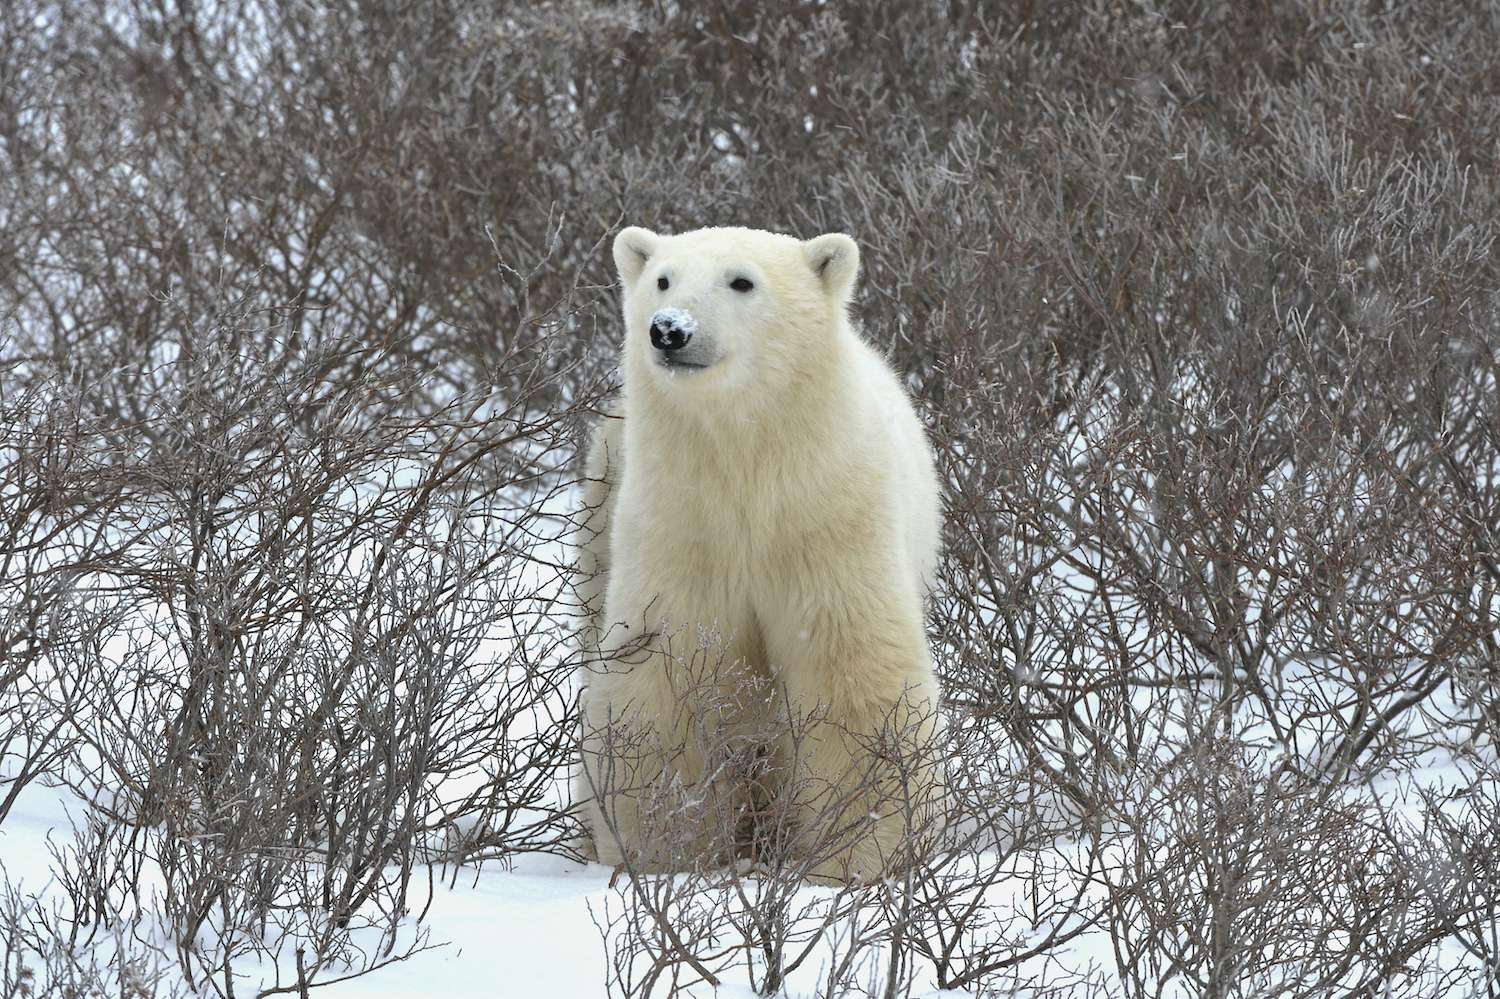 A portrait of the polar bear smelling air.